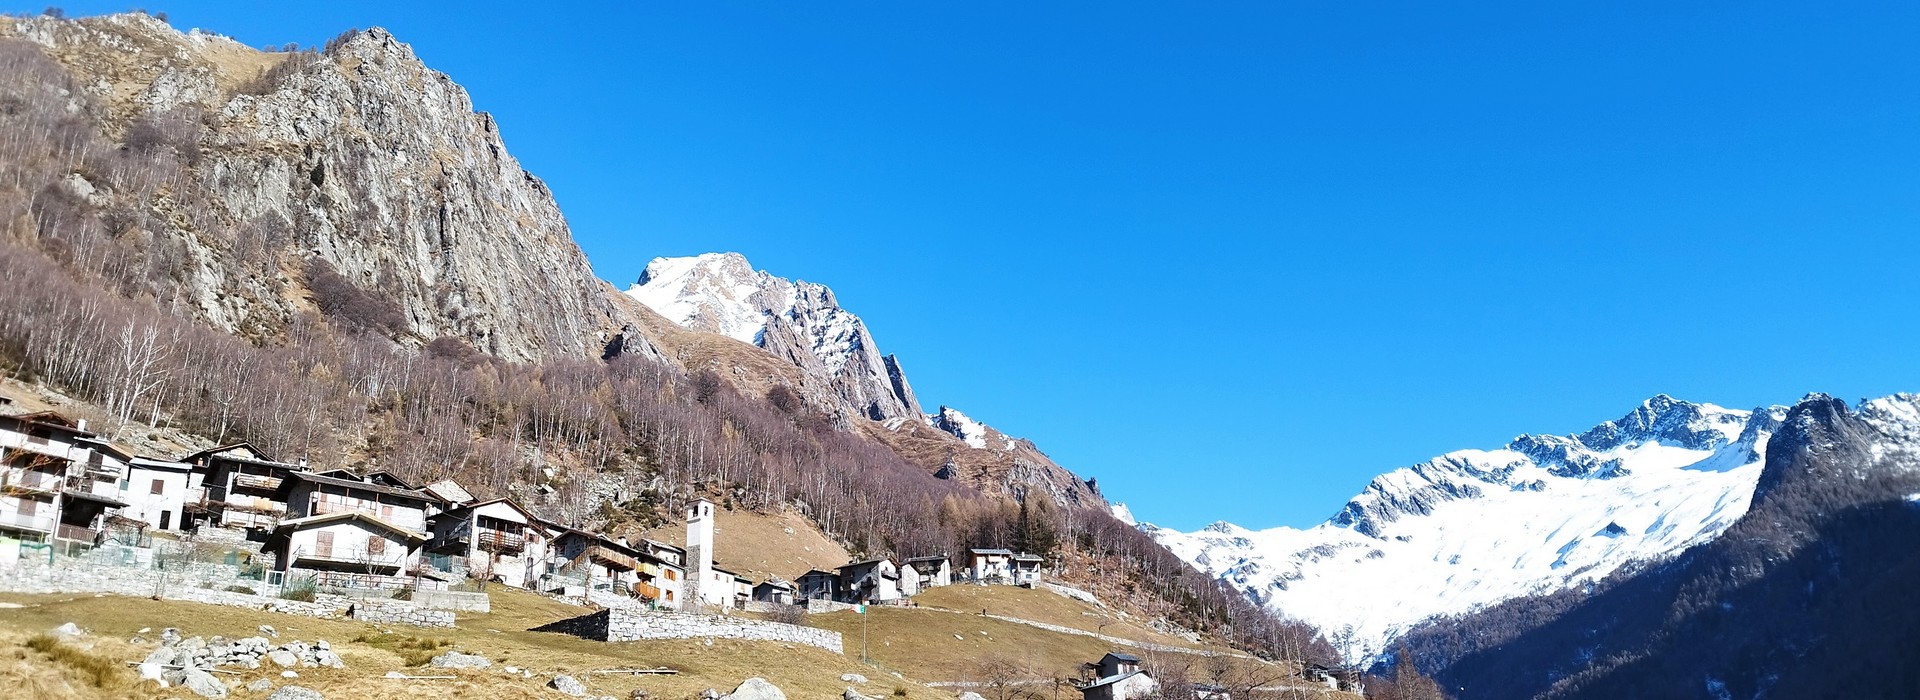 Valle Dei Ratti Lorenzo Stucchi Amm Guide Alpine Lombardia Big